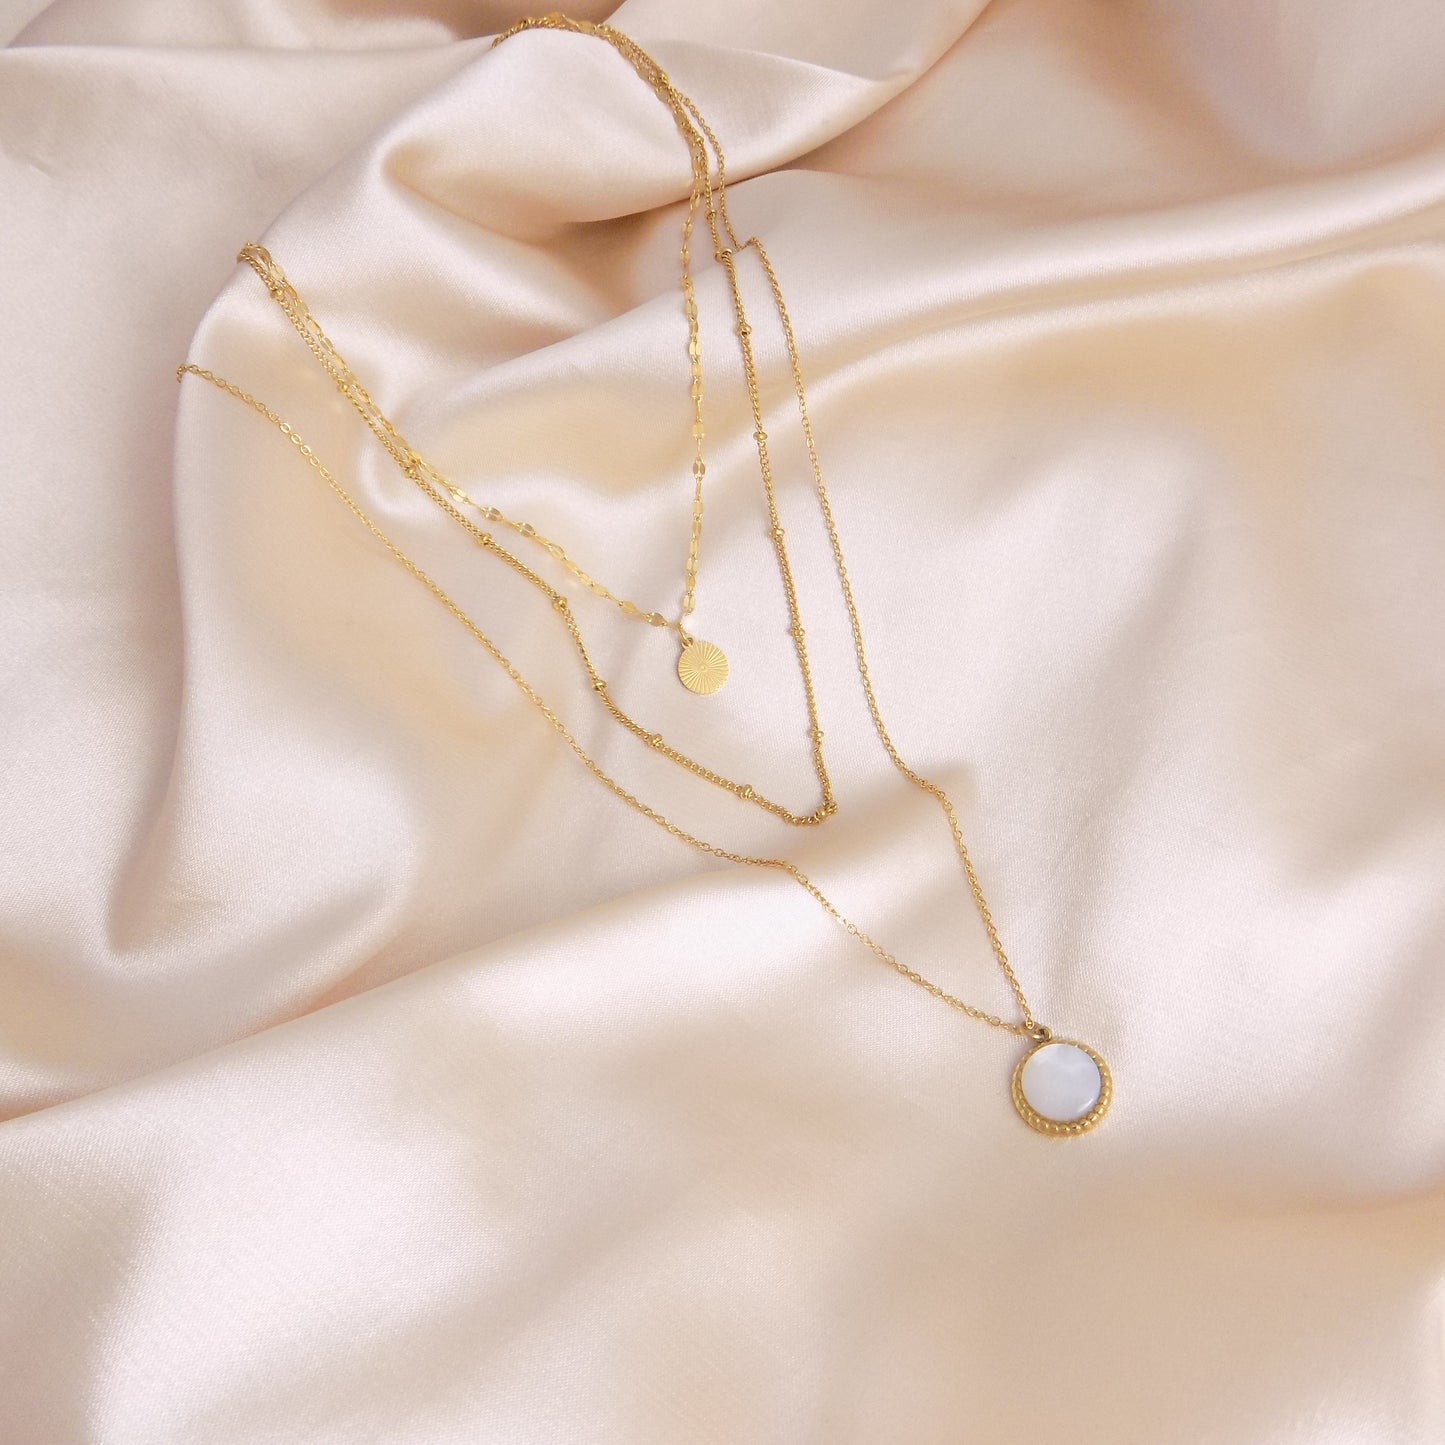 Minimalist Gold Layered Necklace Three Strand - Lace Chain - Satellite Chain - MOP Charm